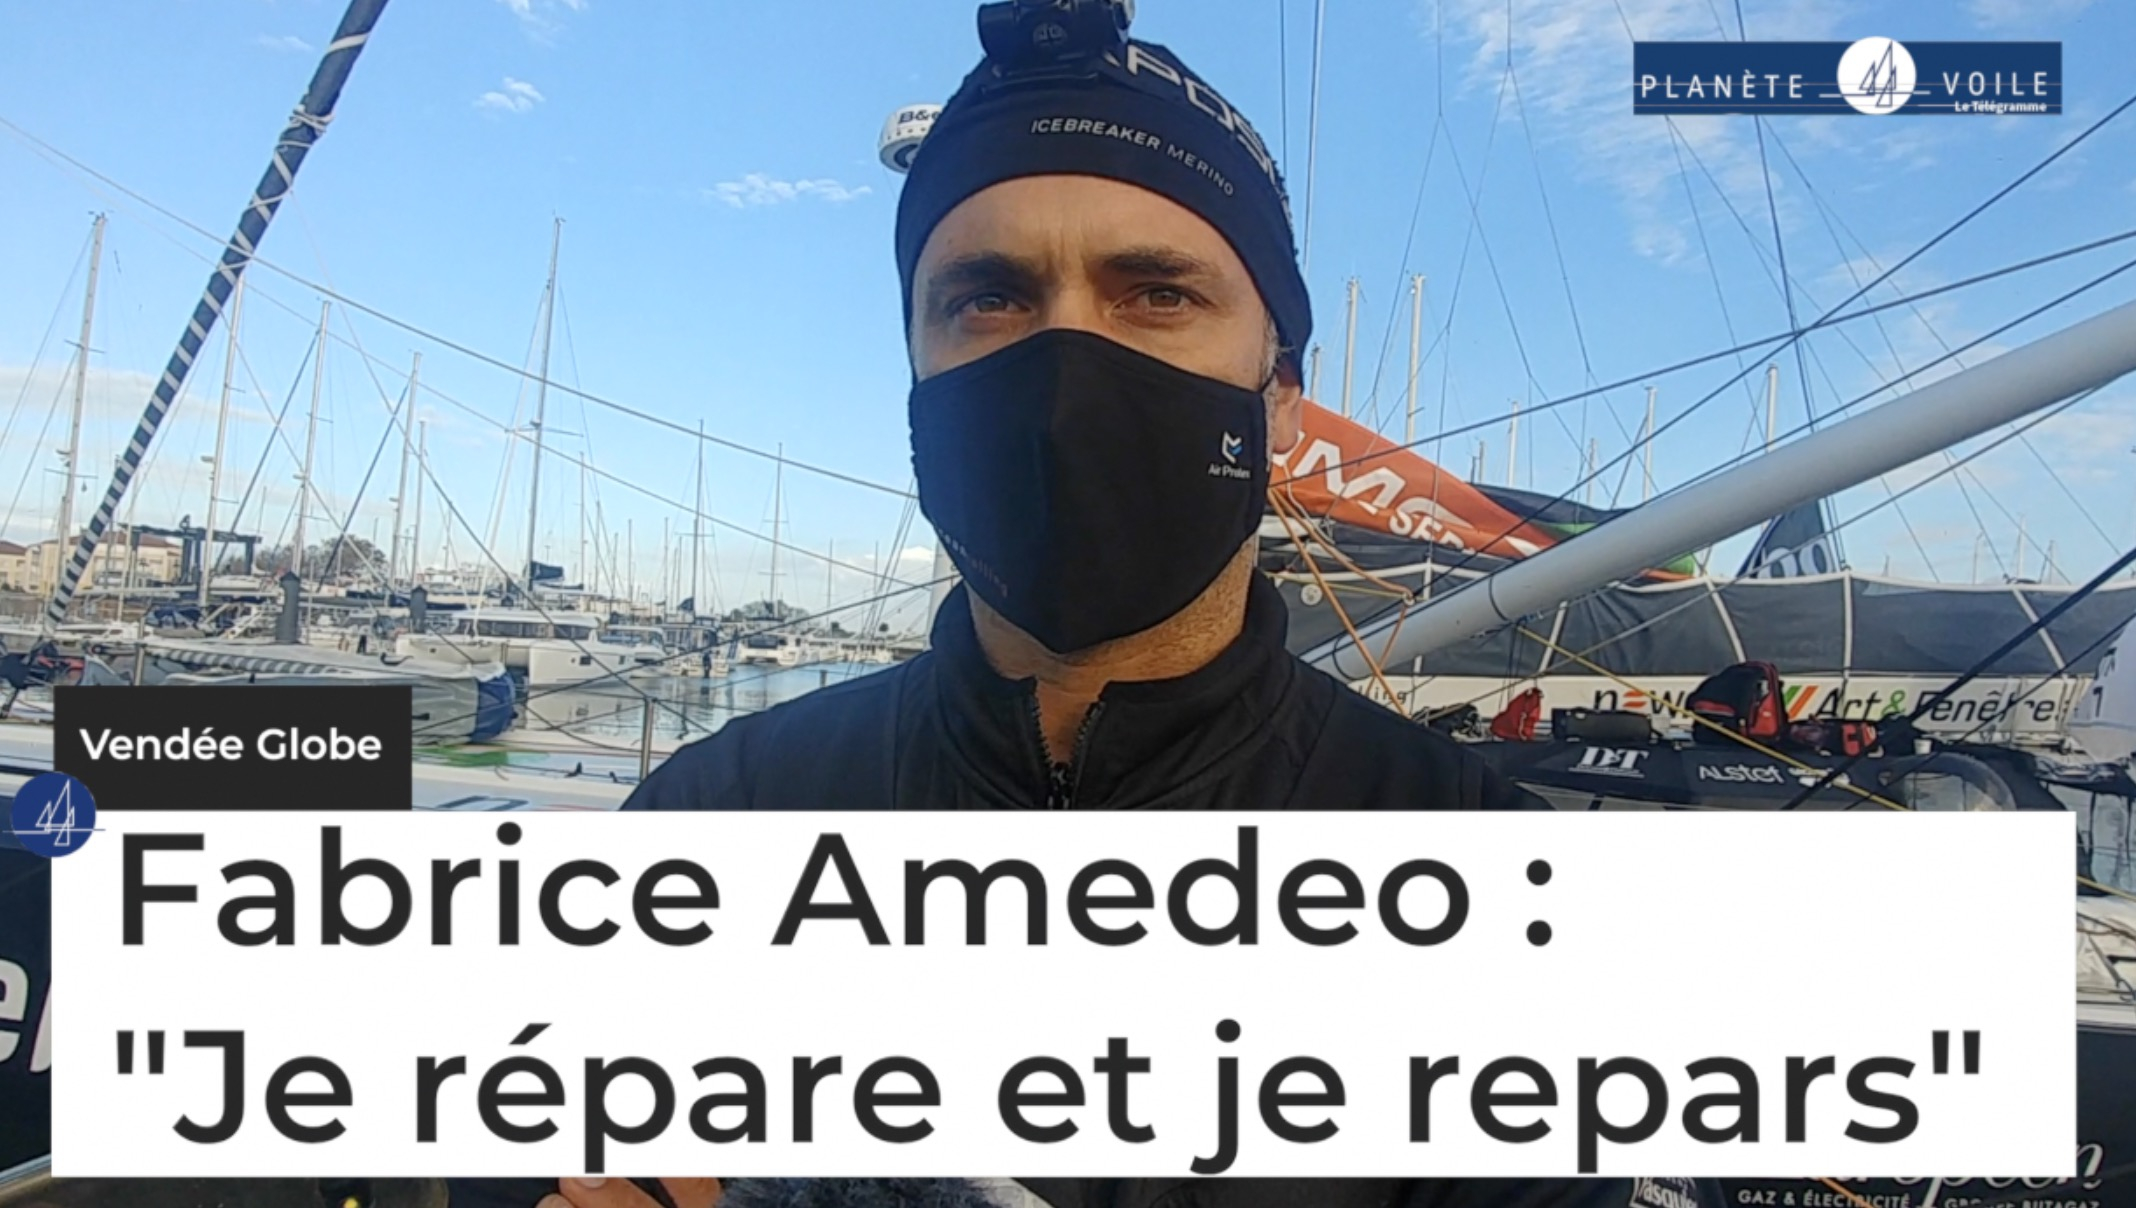 Vendée Globe. Fabrice Amedeo : "Je répare et je repars" (Le Télégramme)